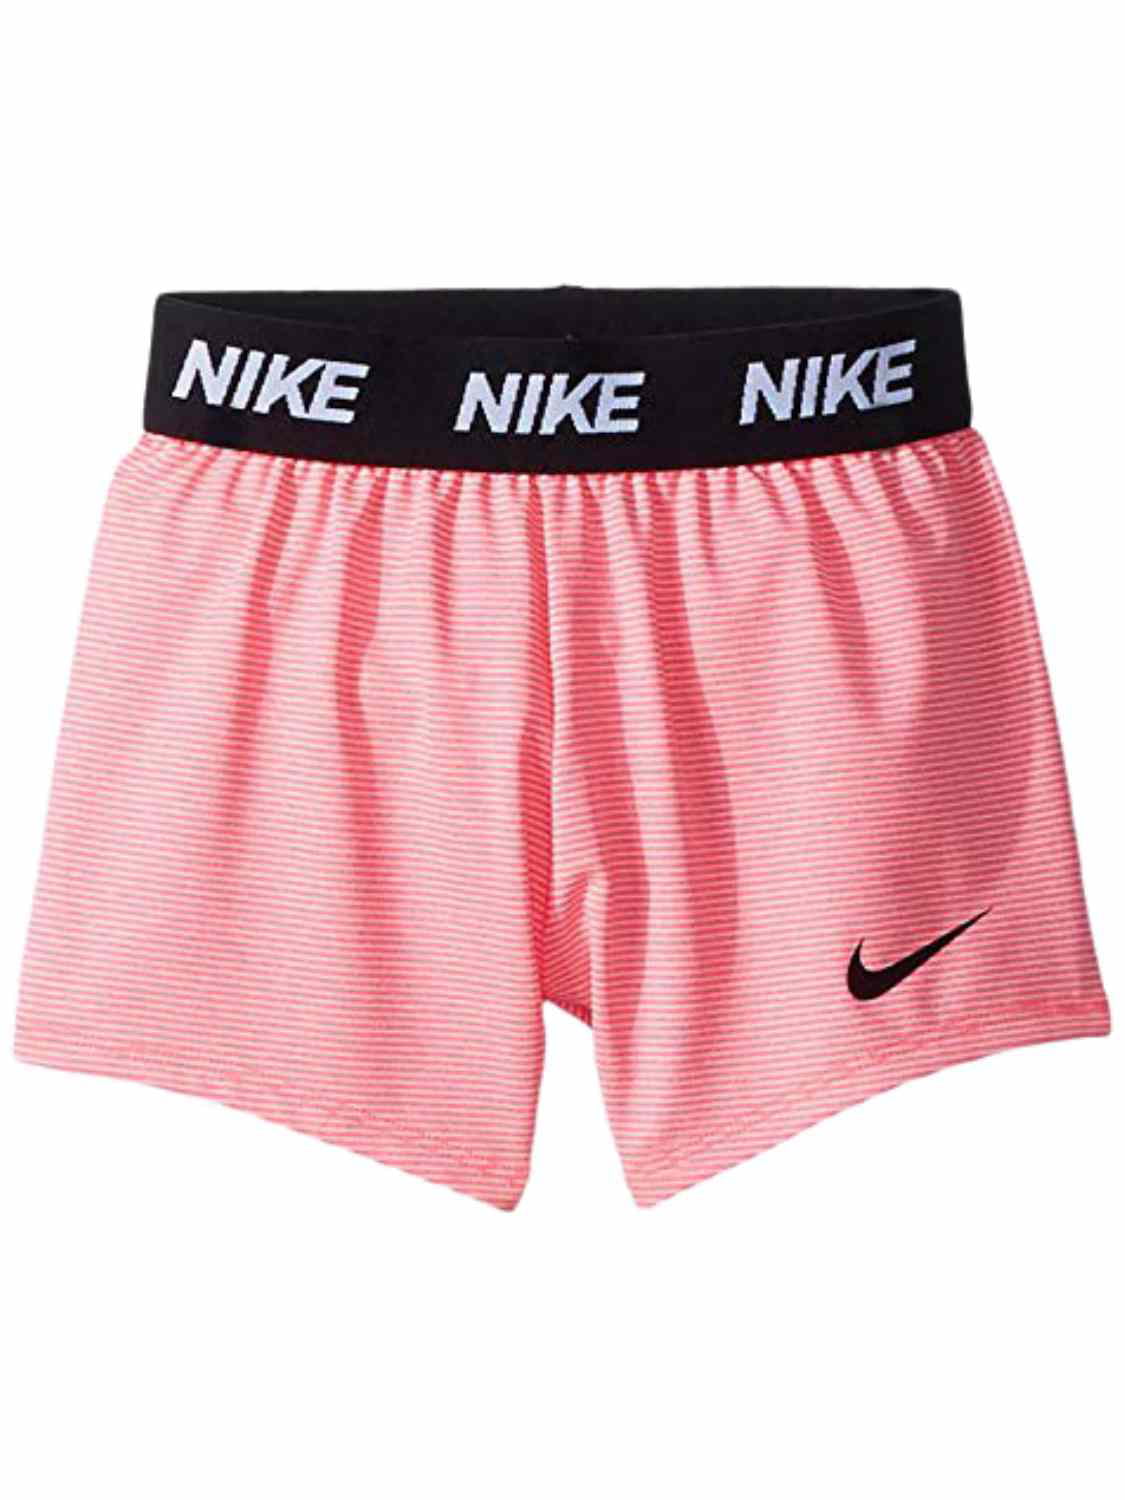 nike light pink shorts